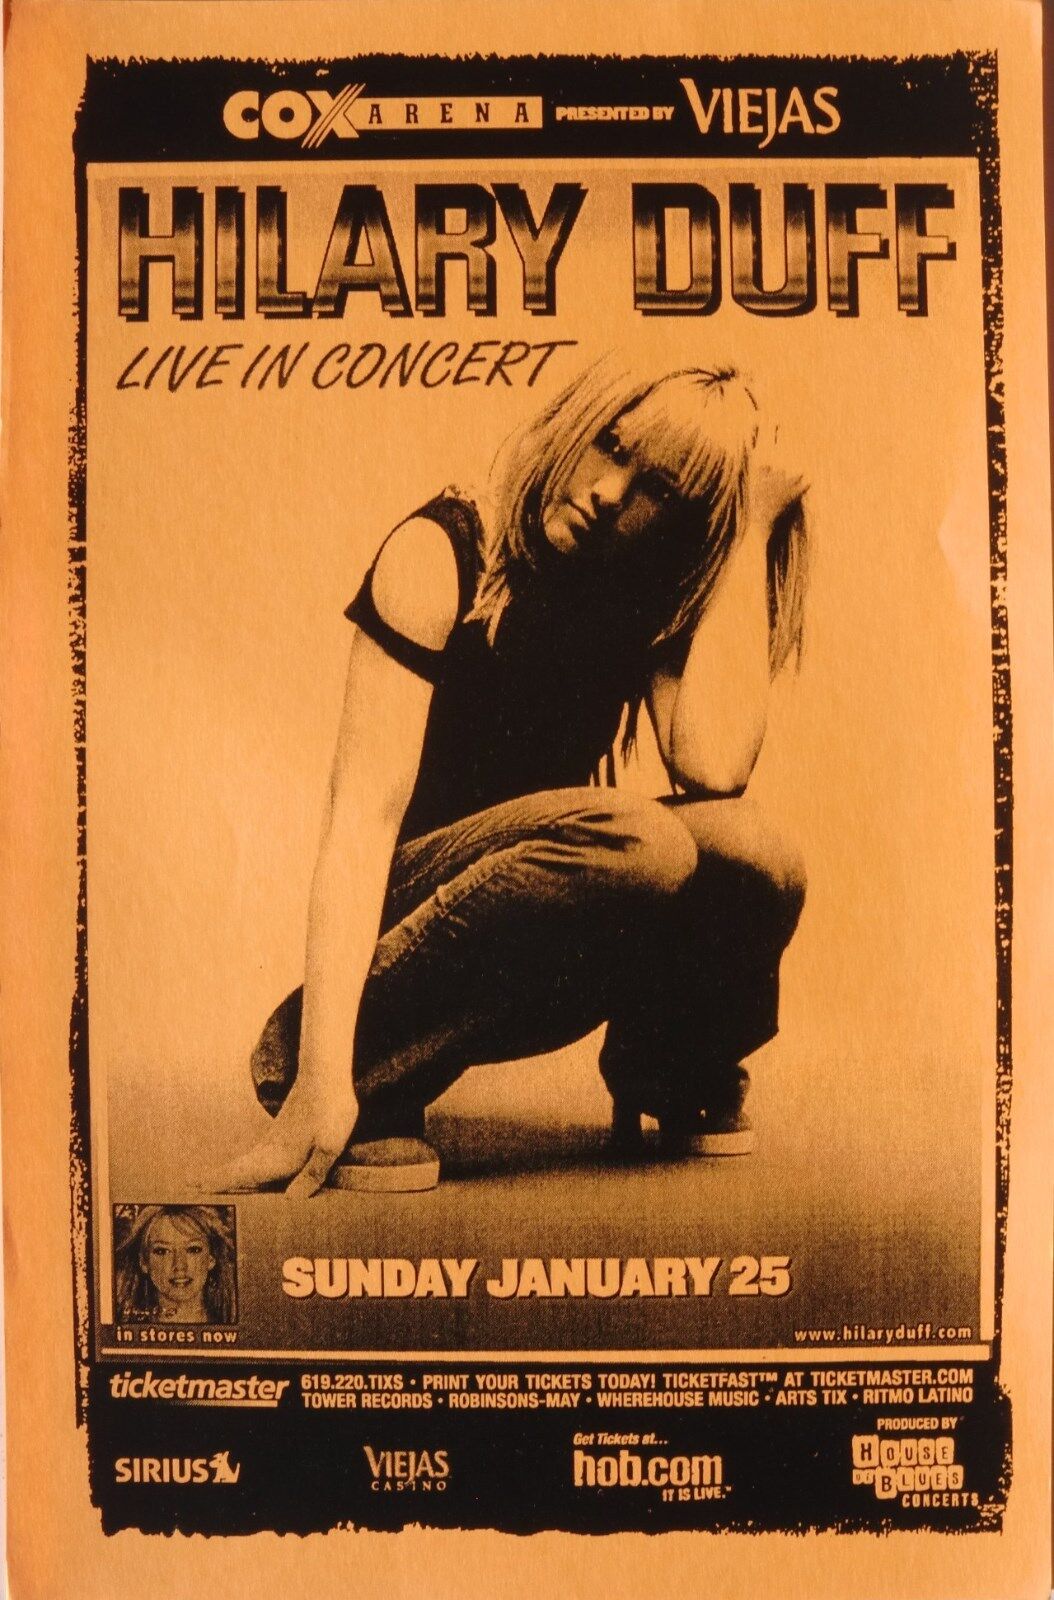 Hilary Duff 2004 "metamorphis Tour" San Diego Concert Poster - Pop Rock Music